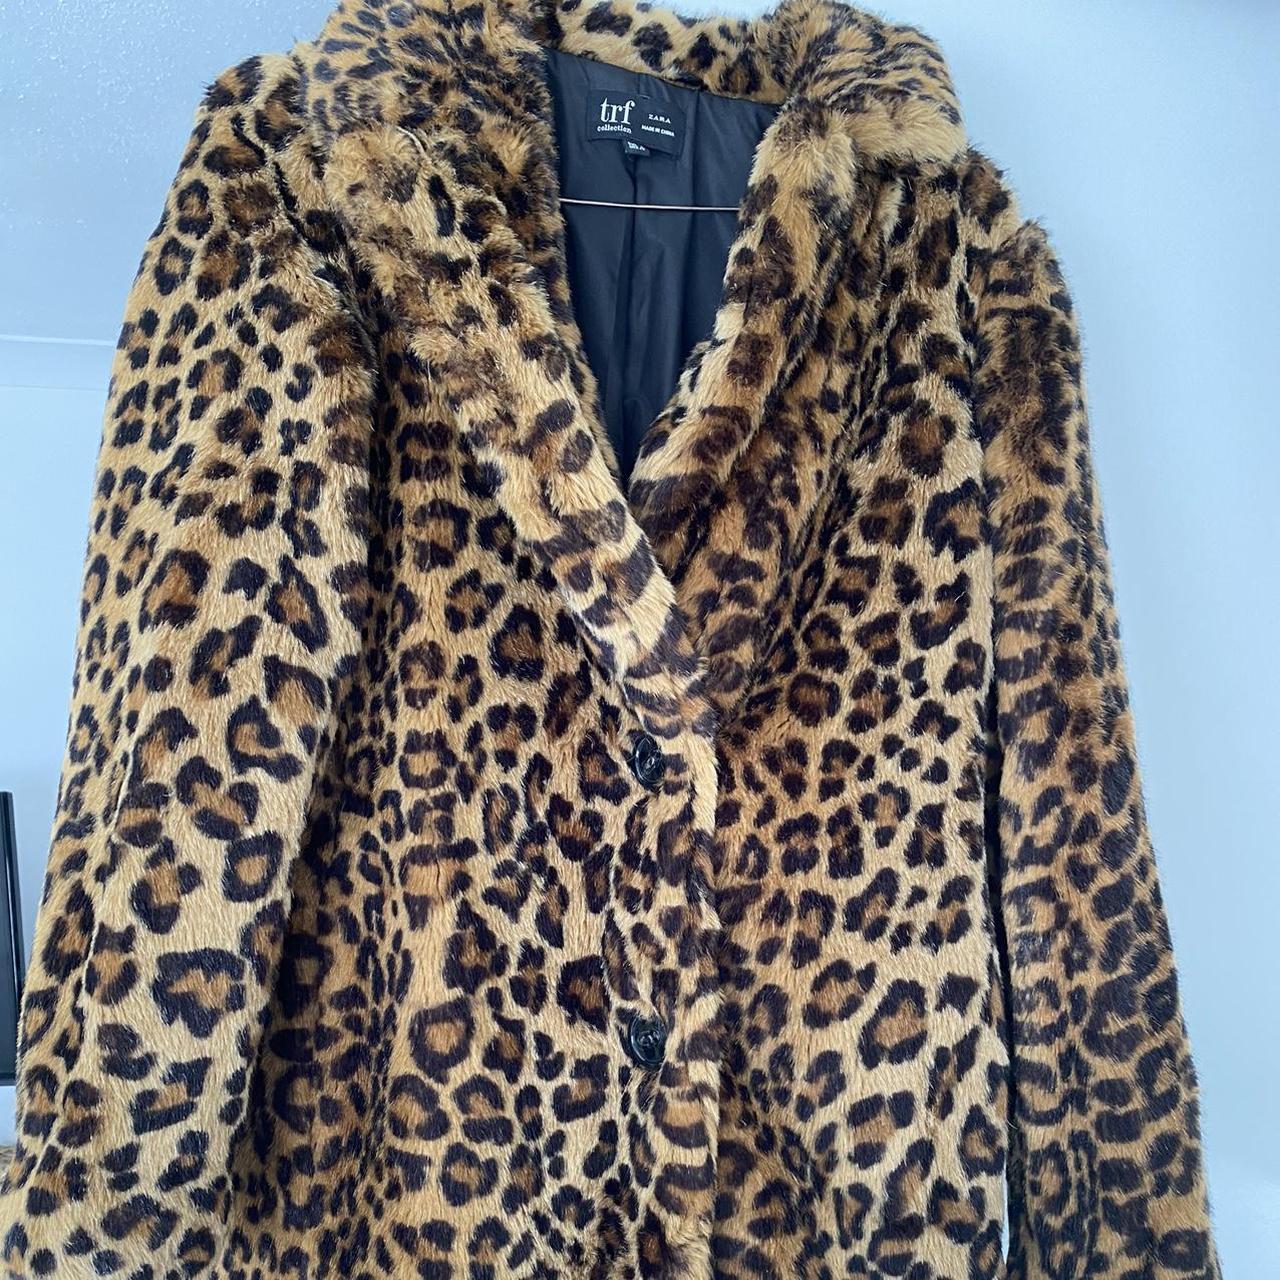 Zara faux fur leopard print jacket. Worn once. Payed... - Depop